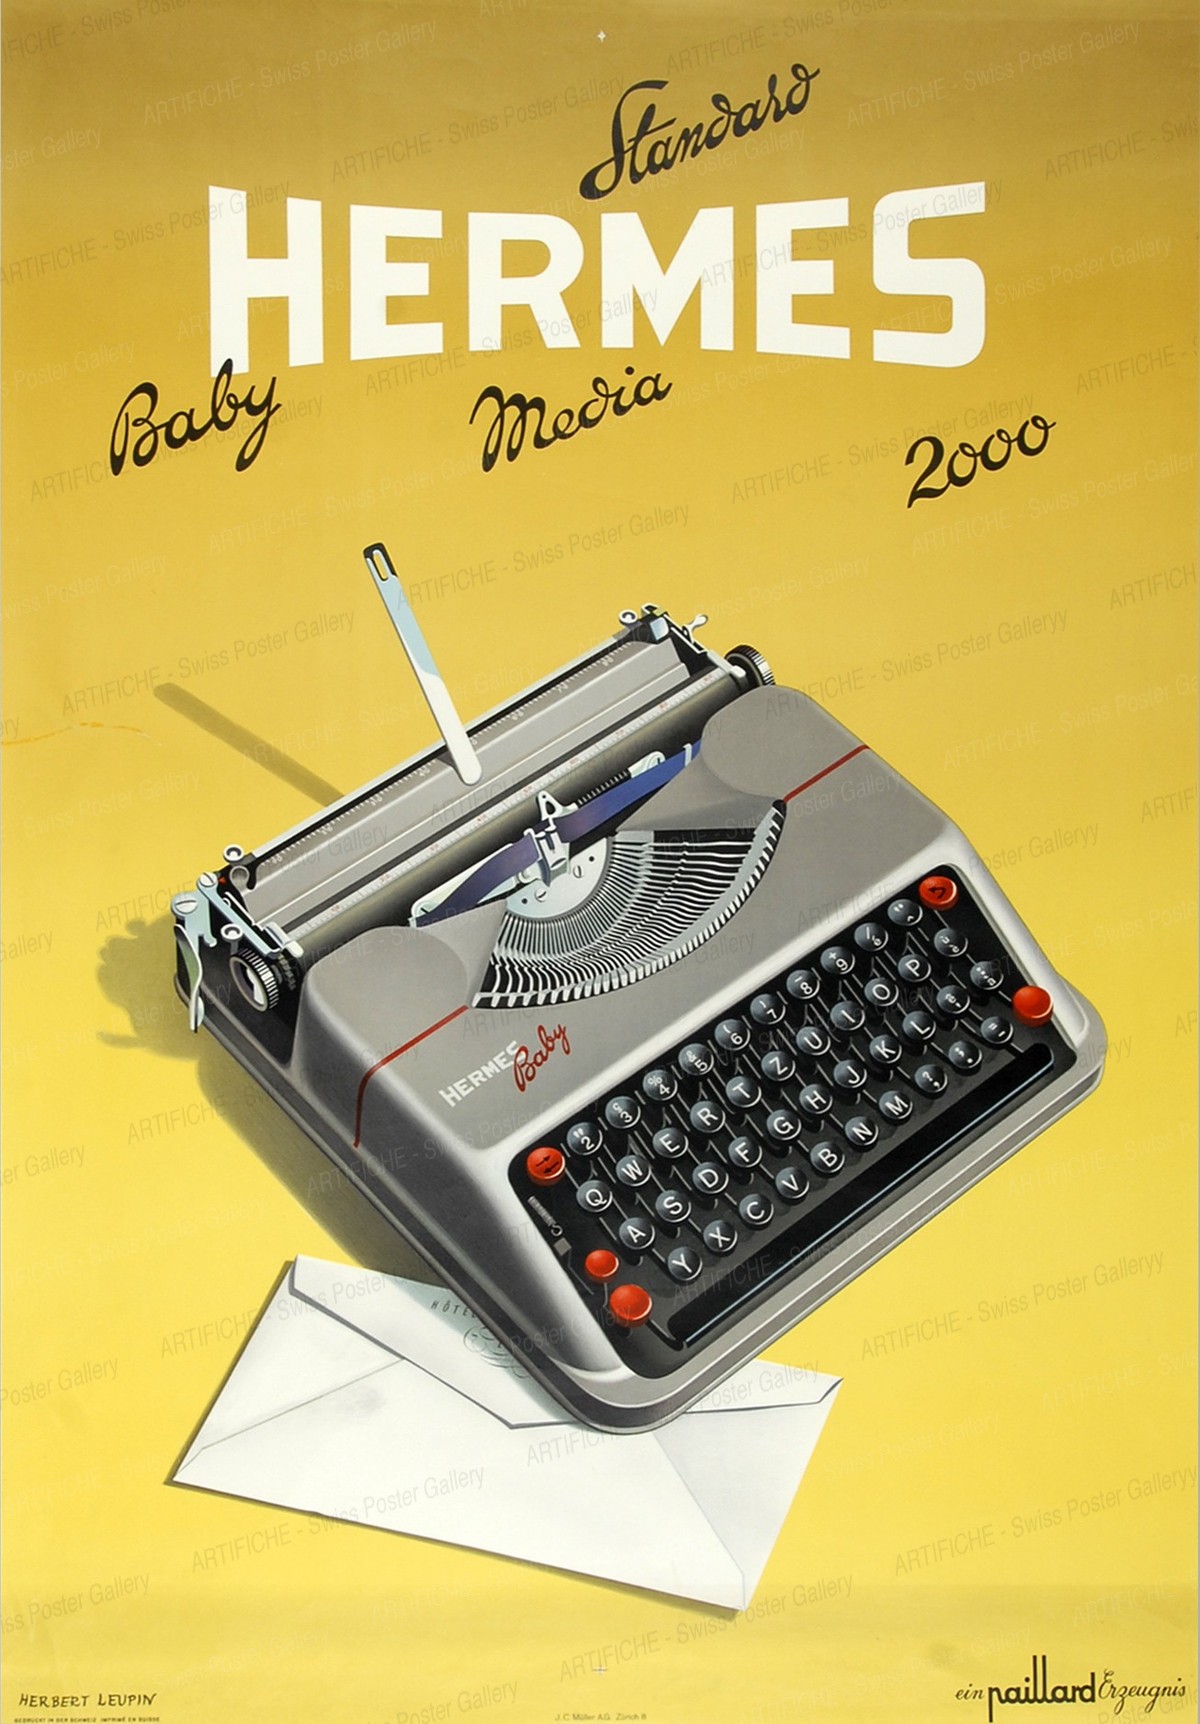 HERMES – Baby Standard Media 2000 – Ein Paillard Erzeugnis, Herbert Leupin